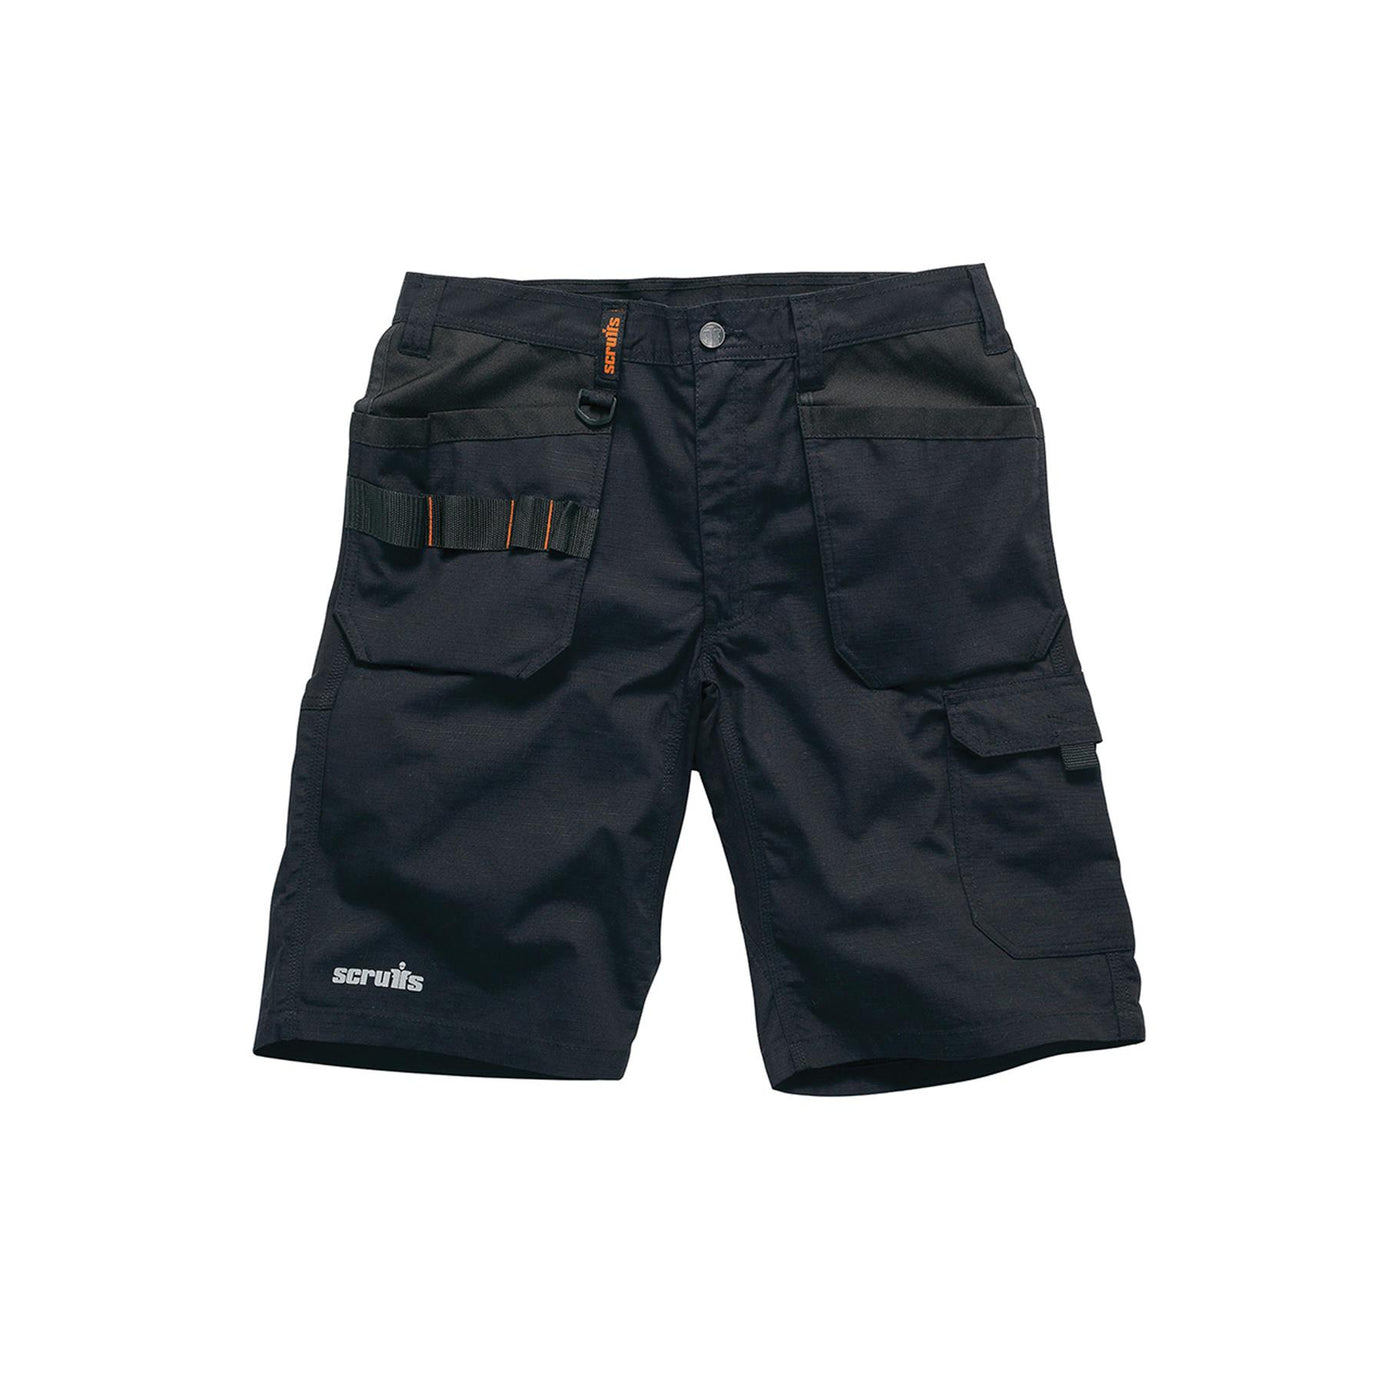 Scruffs Flex Holster Shorts Cargo Combat Pockets Hard Wearing Black 34 Waist